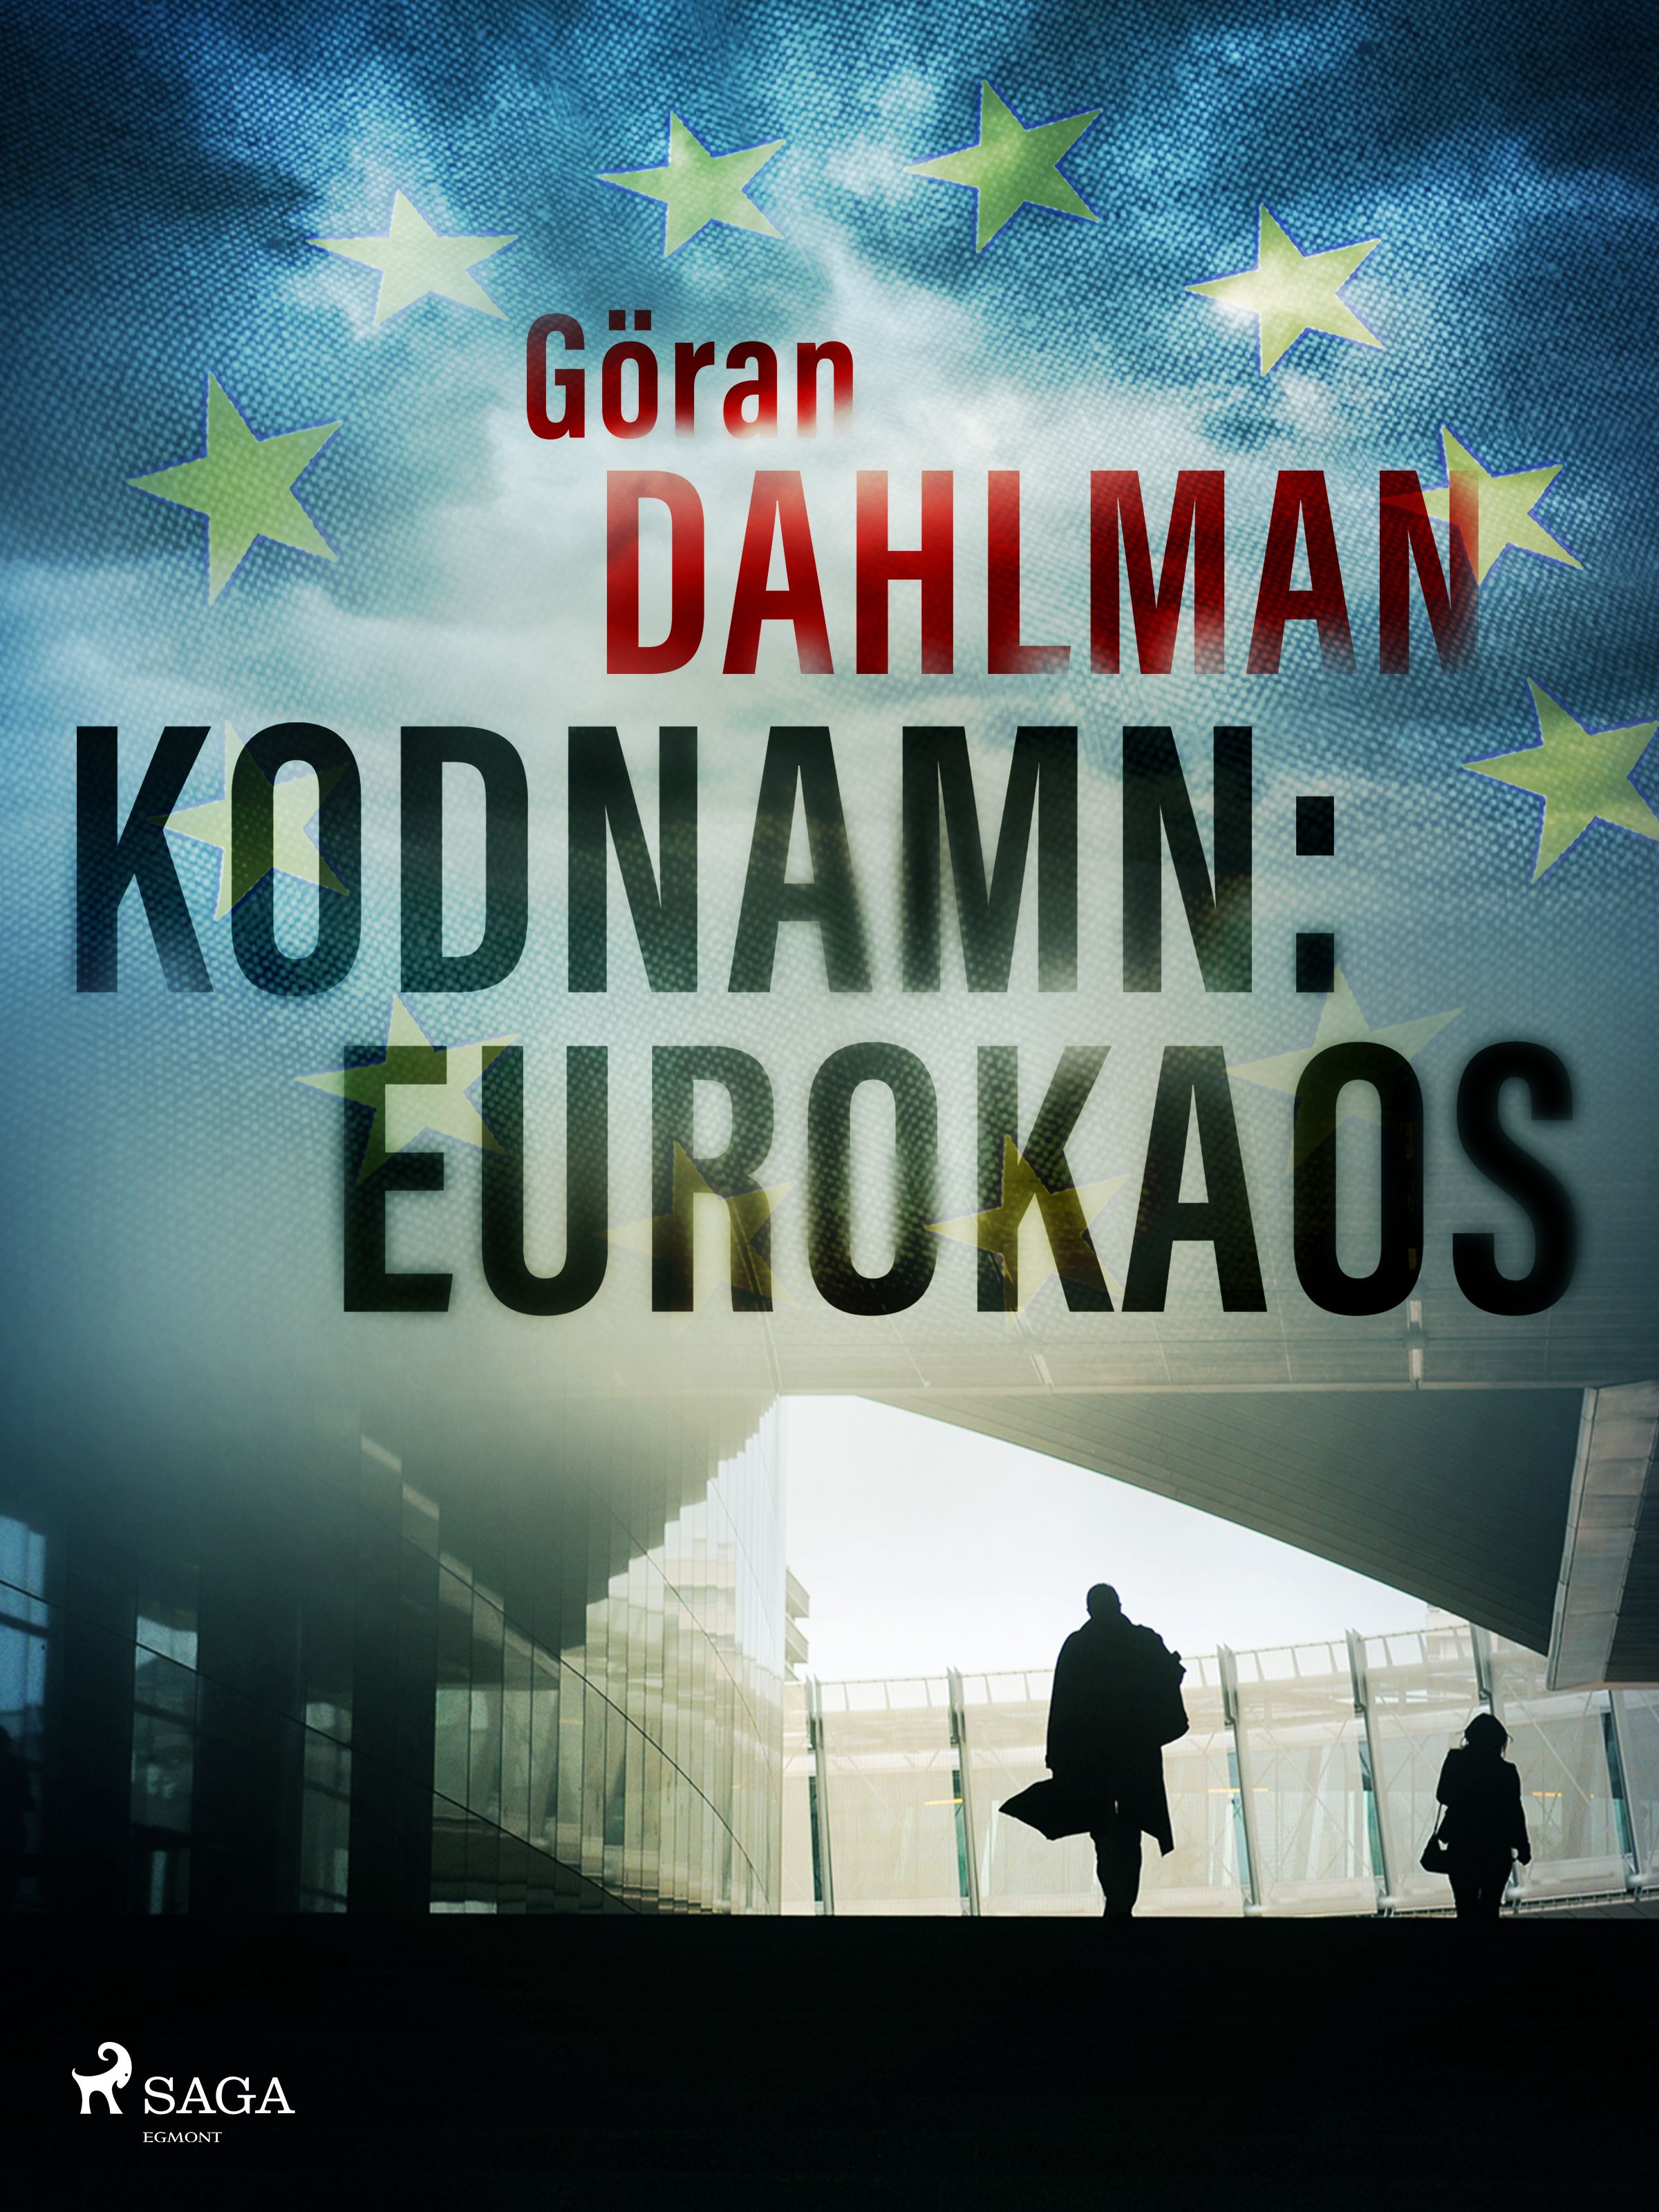 Kodnamn: Eurokaos, e-bok av Göran Dahlman